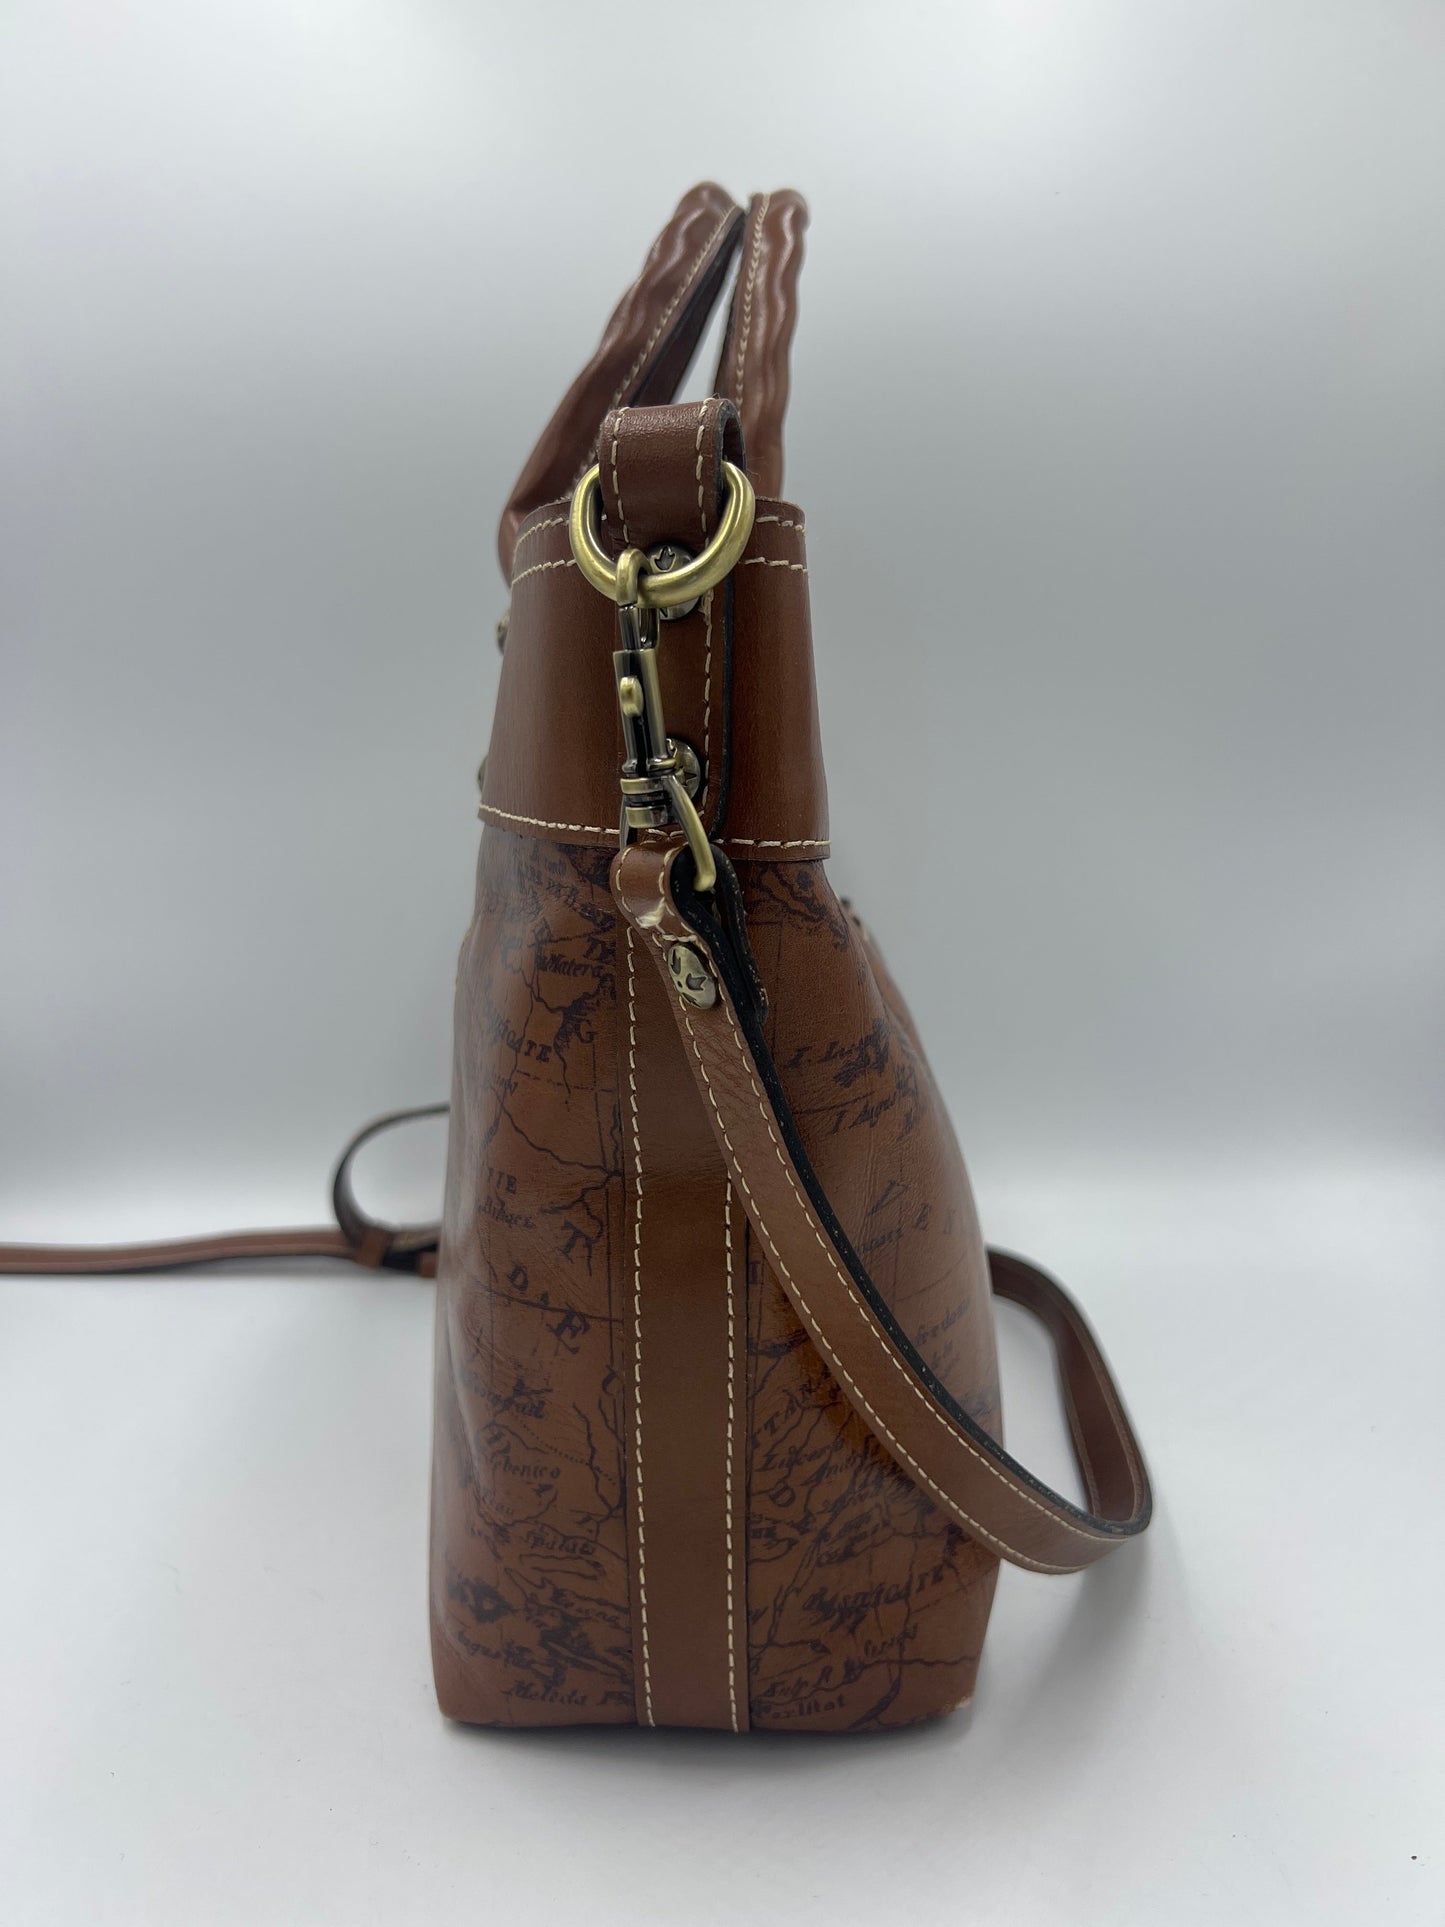 Like New! Tote / Handbag Designer By Patricia Nash